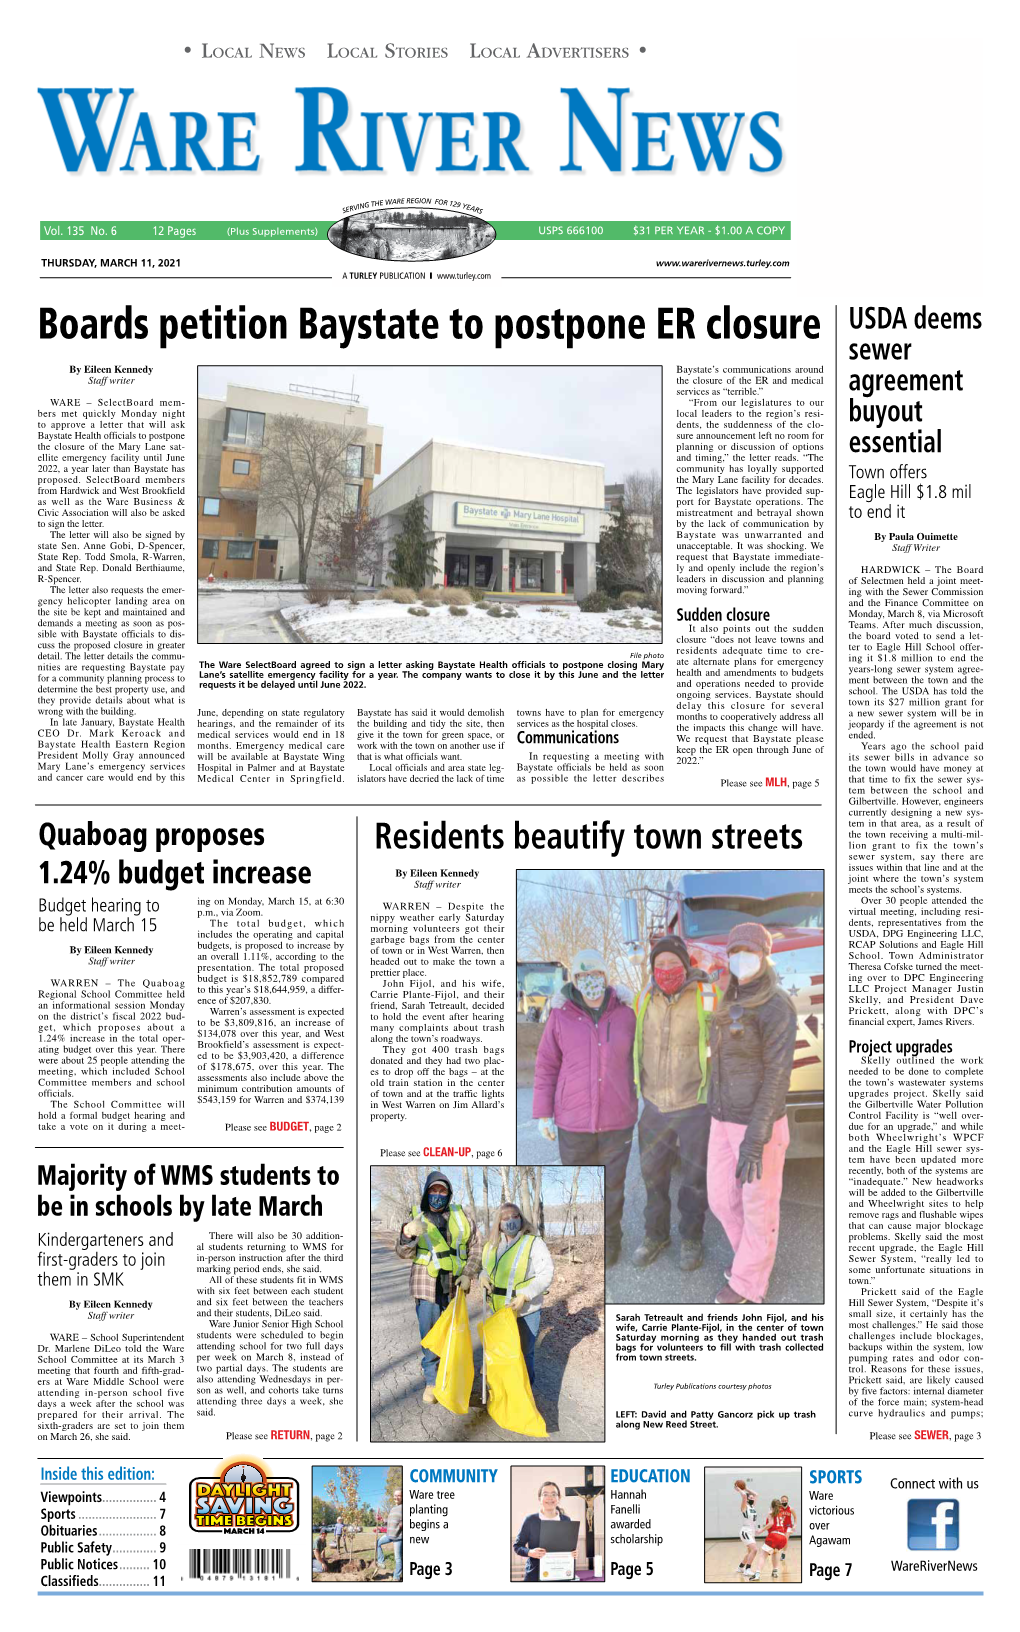 Boards Petition Baystate to Postpone ER Closure